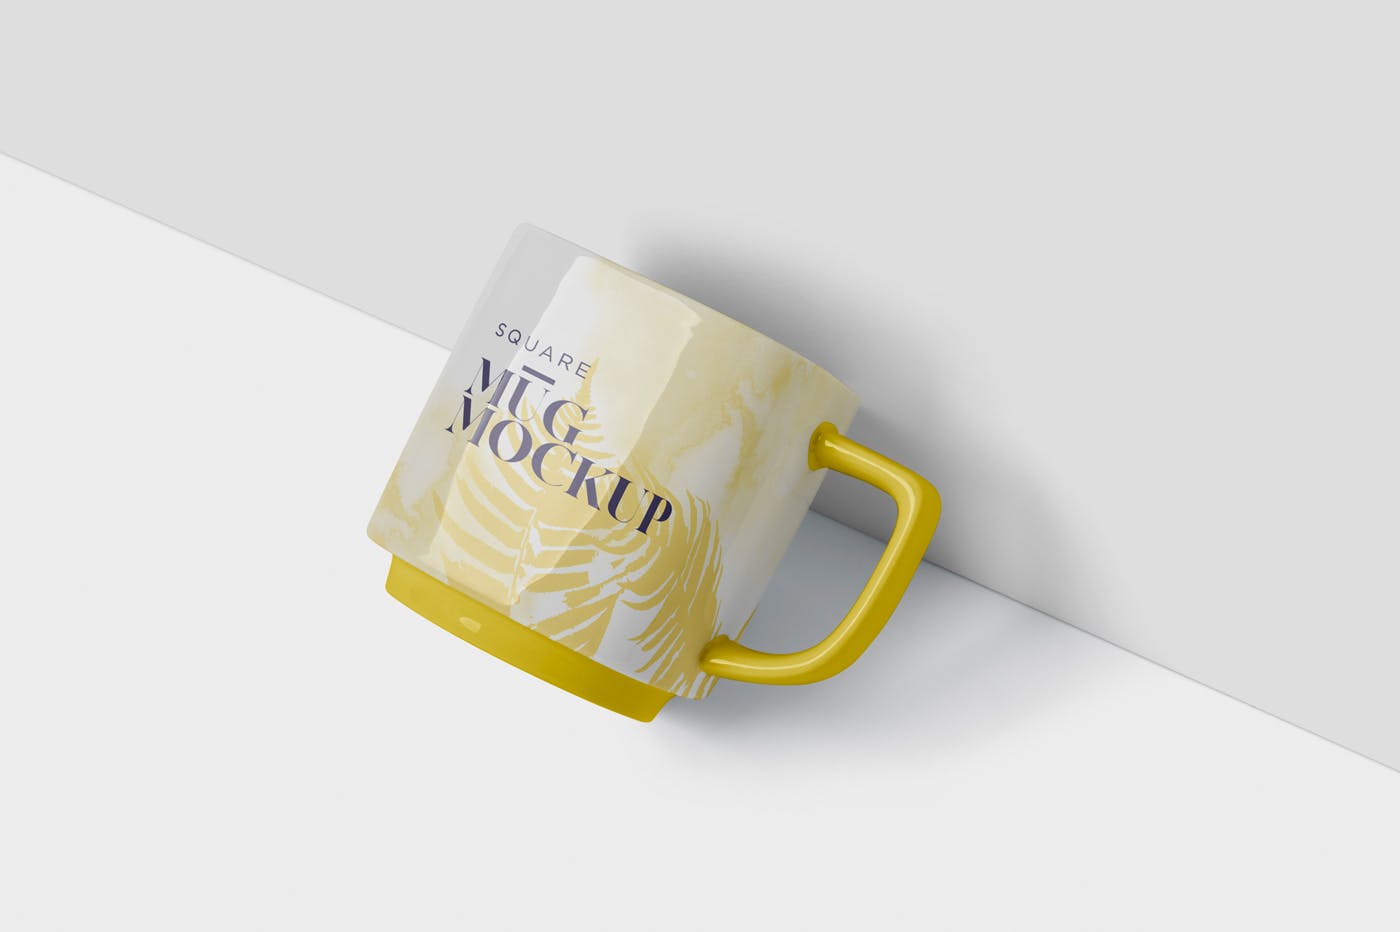 方形马克杯图案设计普贤居精选模板 Mug Mockup – Square Shaped插图(2)